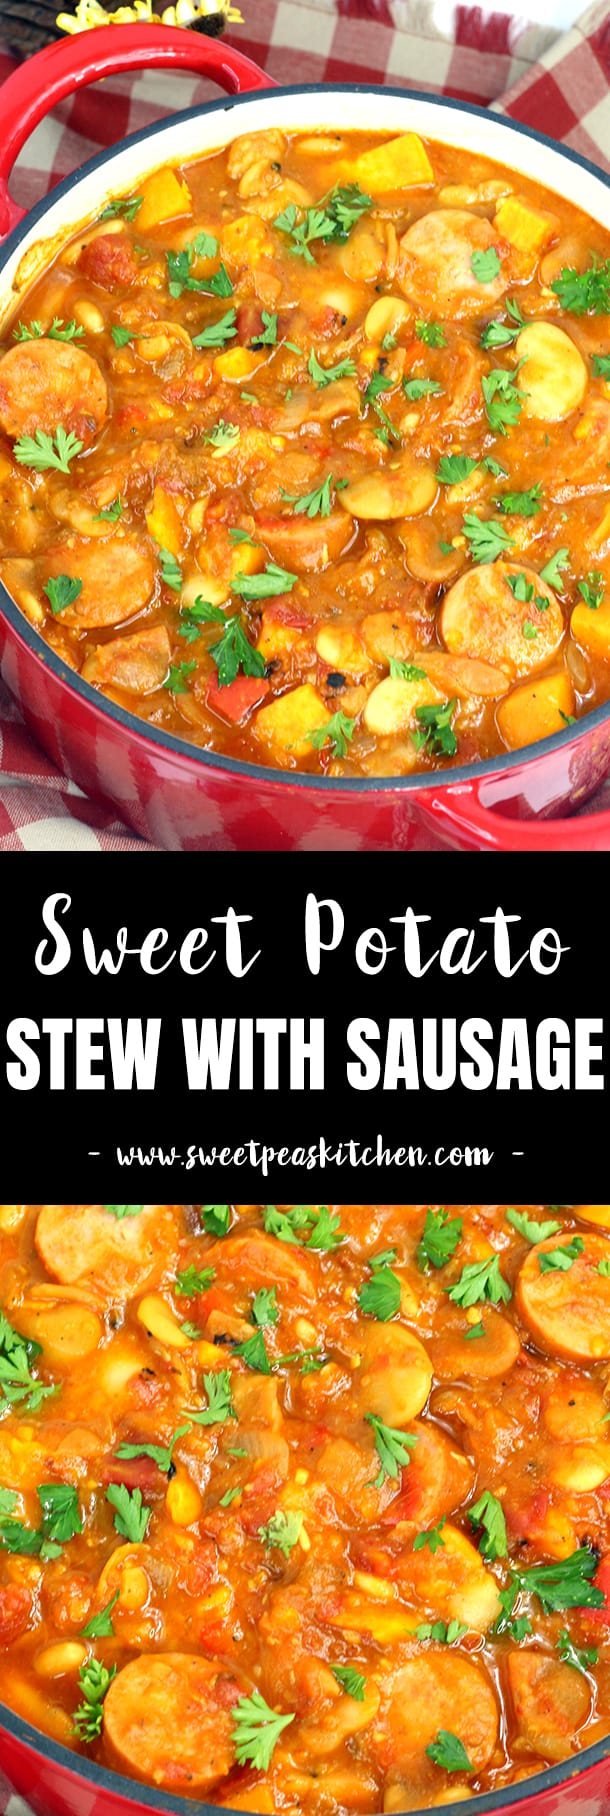 Sweet Potato Stew with Sausage